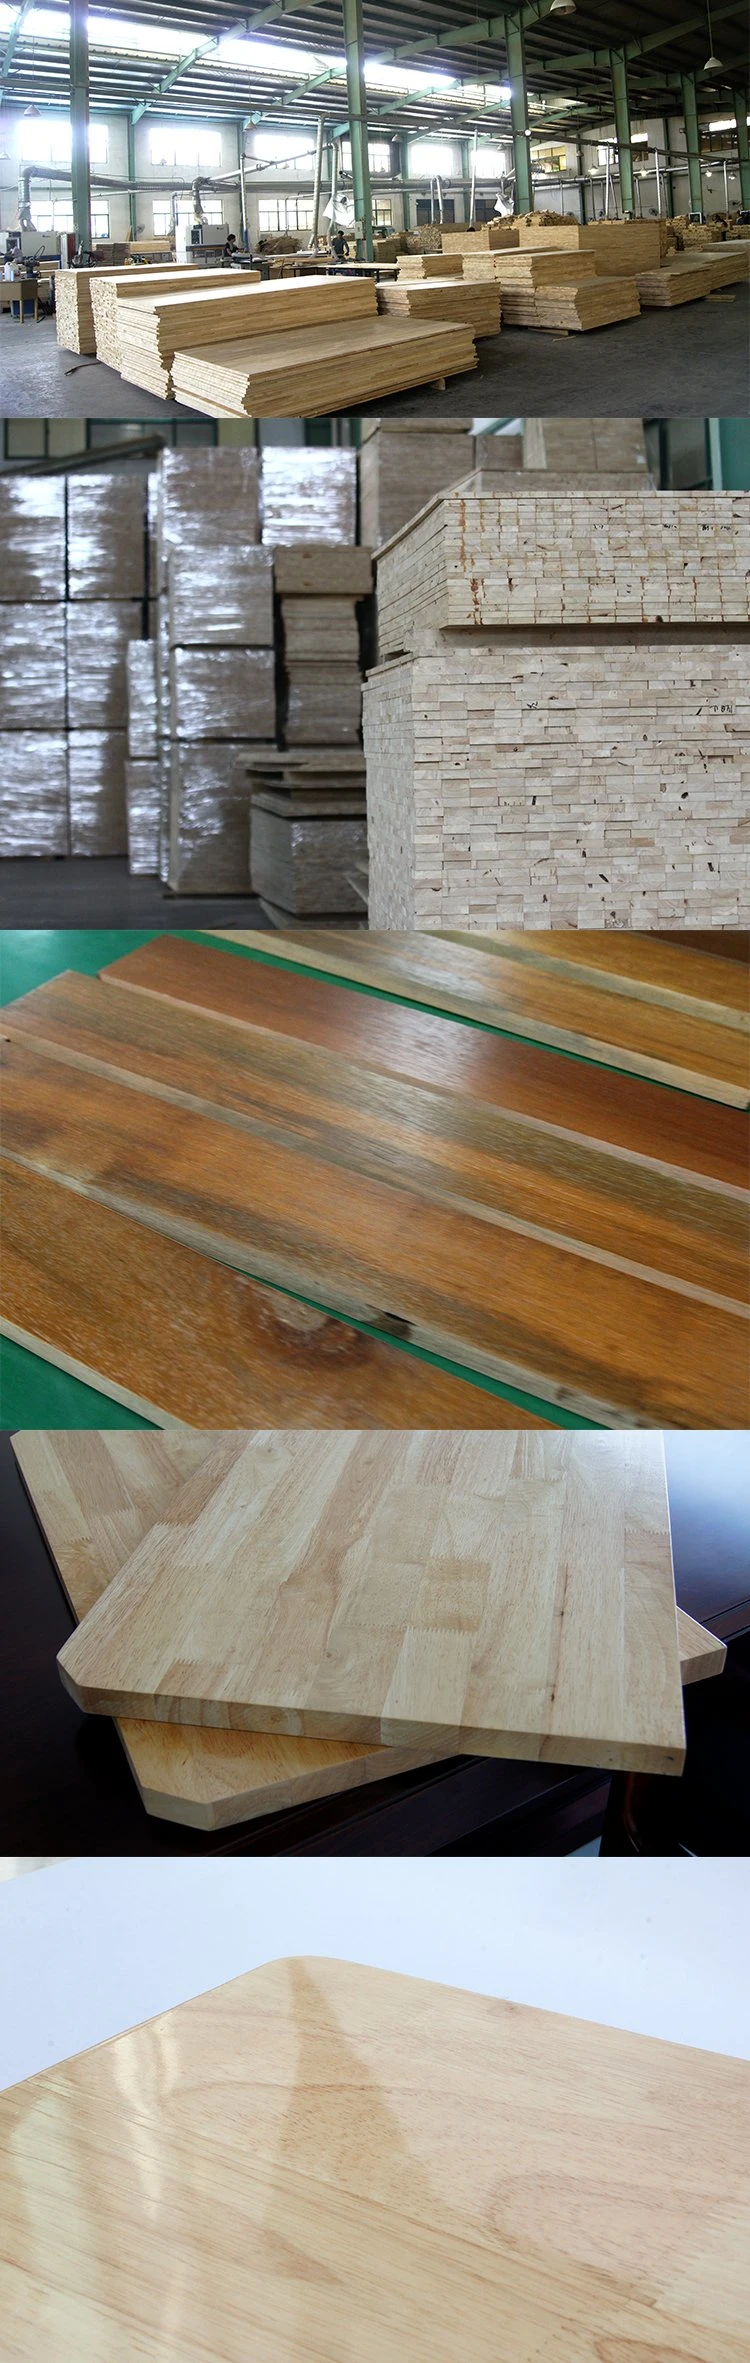 Wood Grain Decorative Acacia Cutting Board